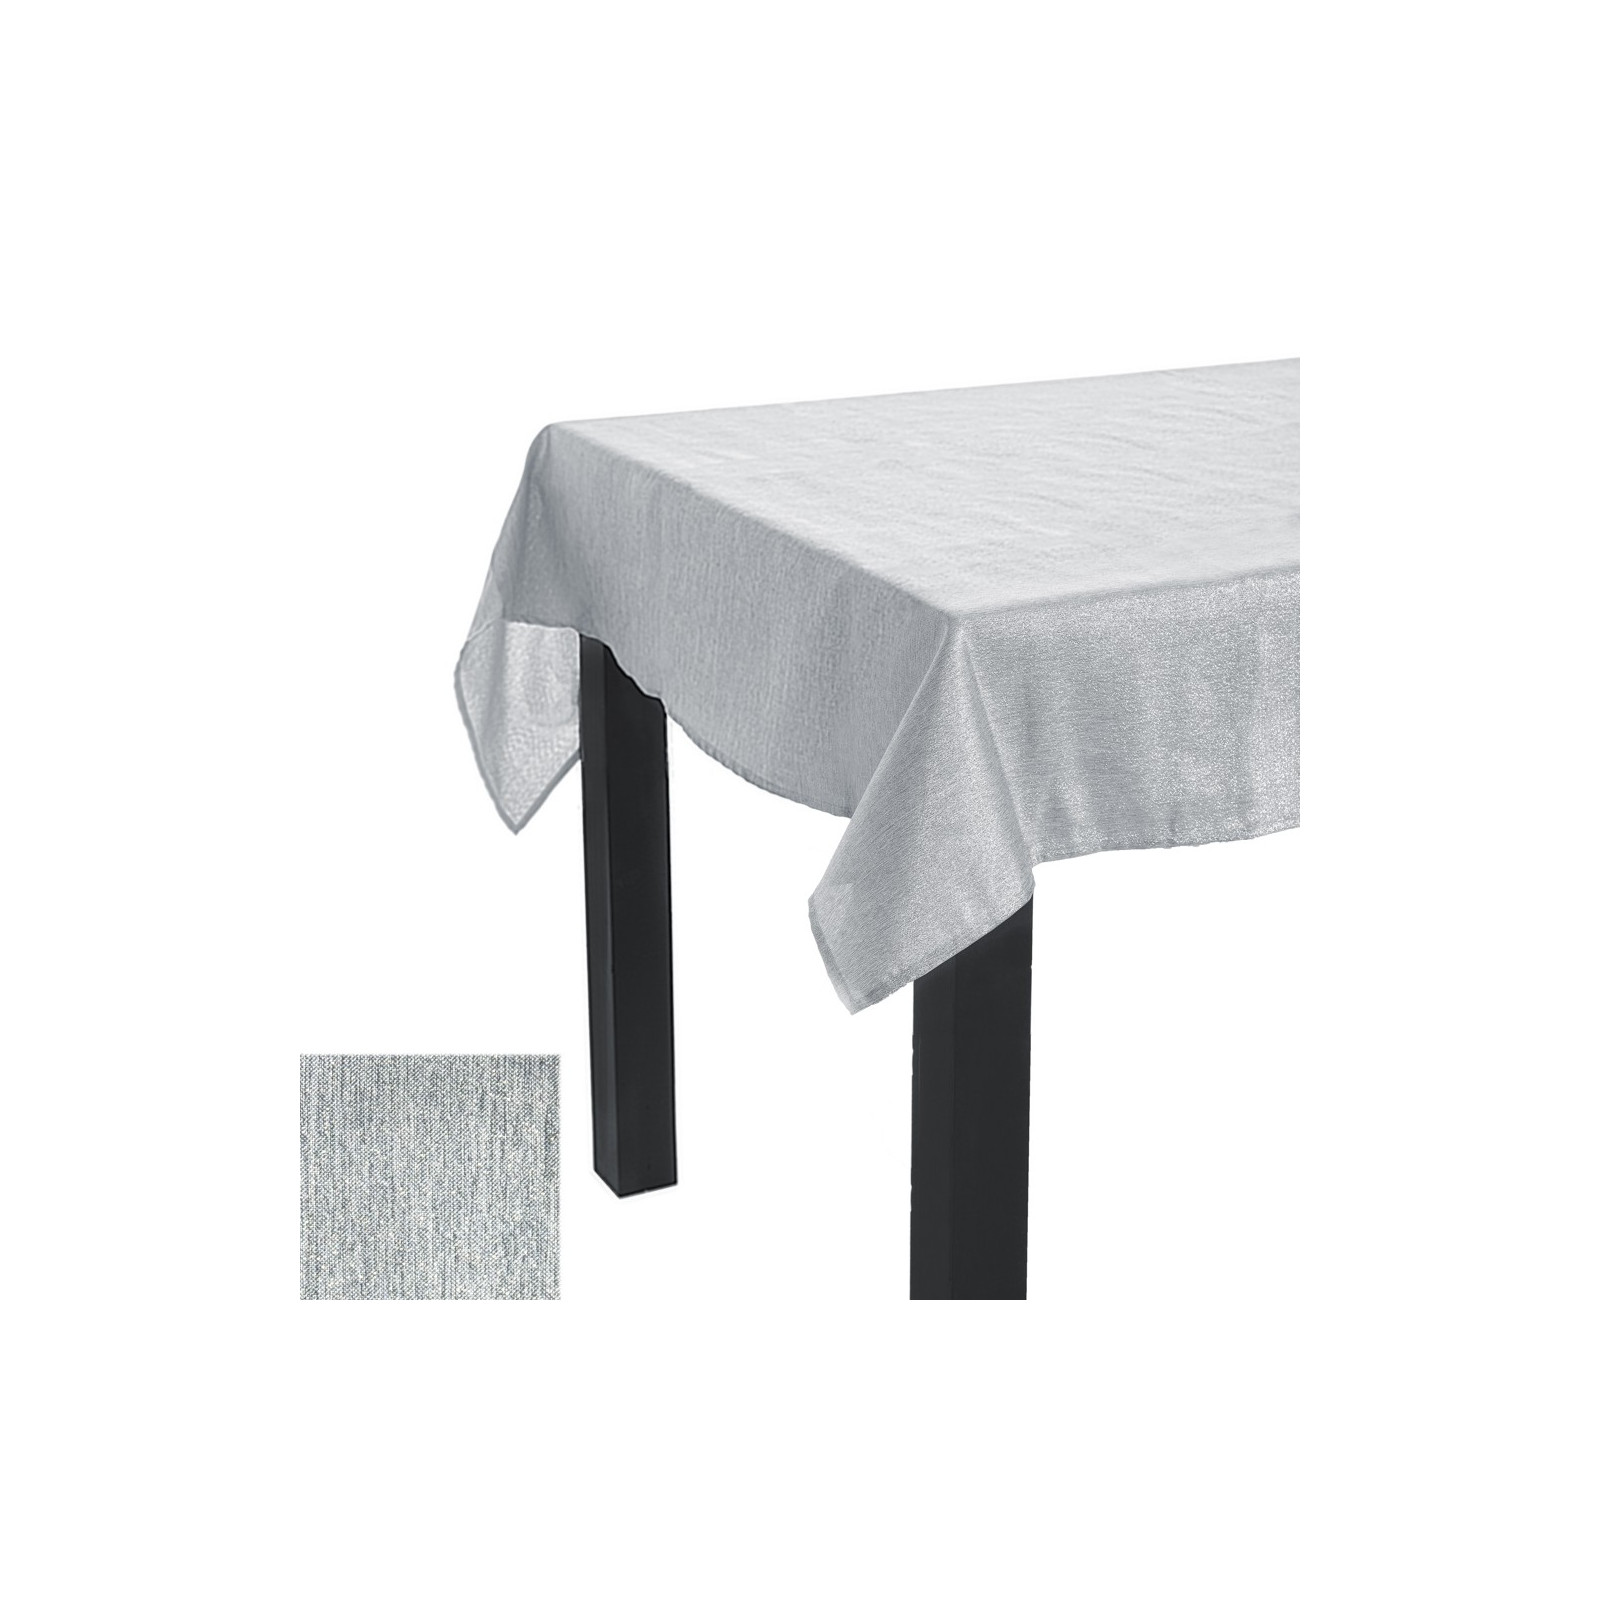 Toalha de mesa de poliéster prata 140 x 150 cm